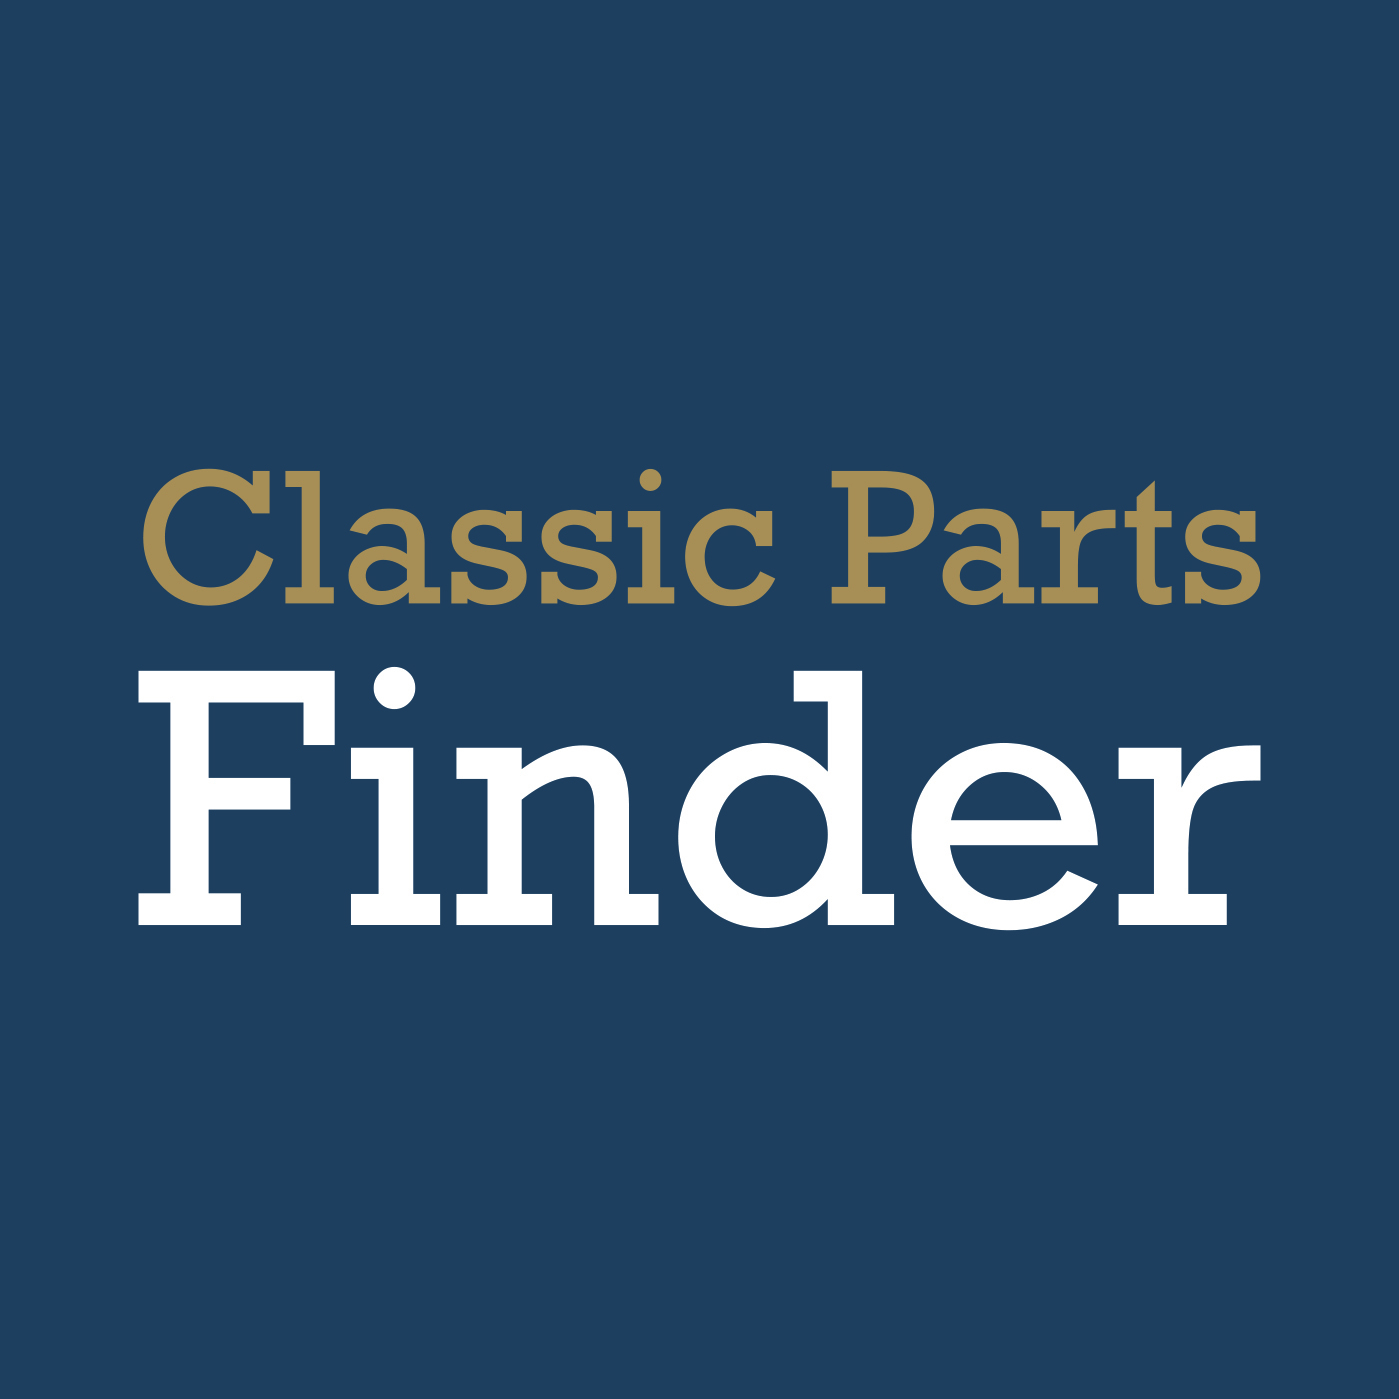 Restore a spare part - Classic Parts Finder